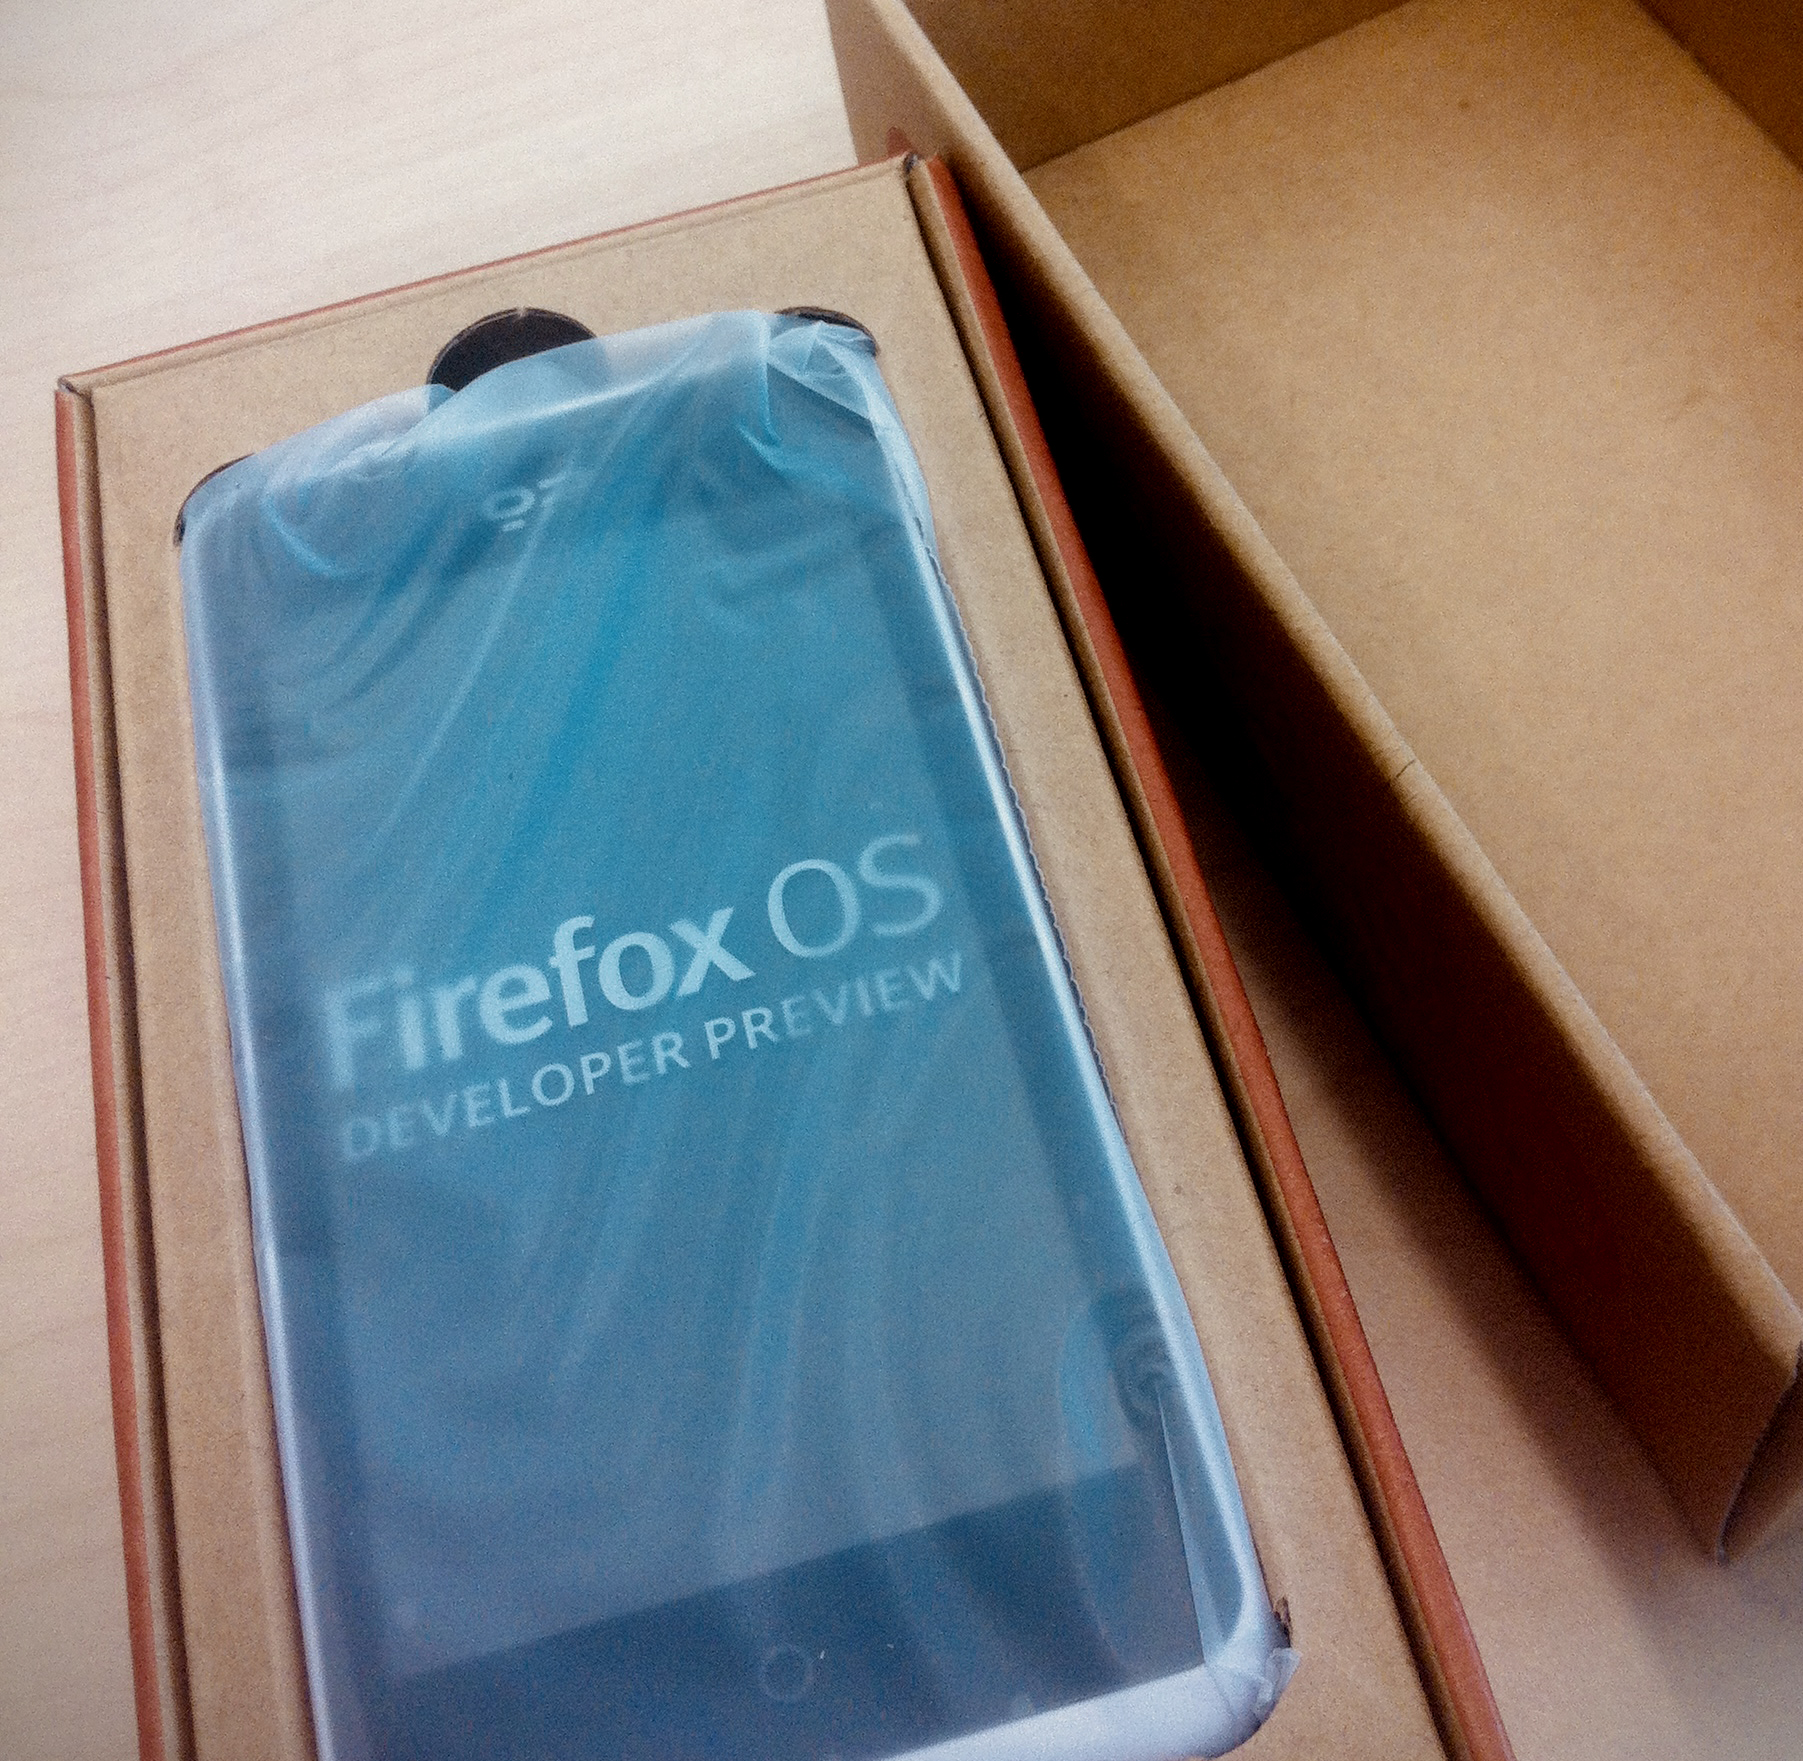 FirefoxOS_box